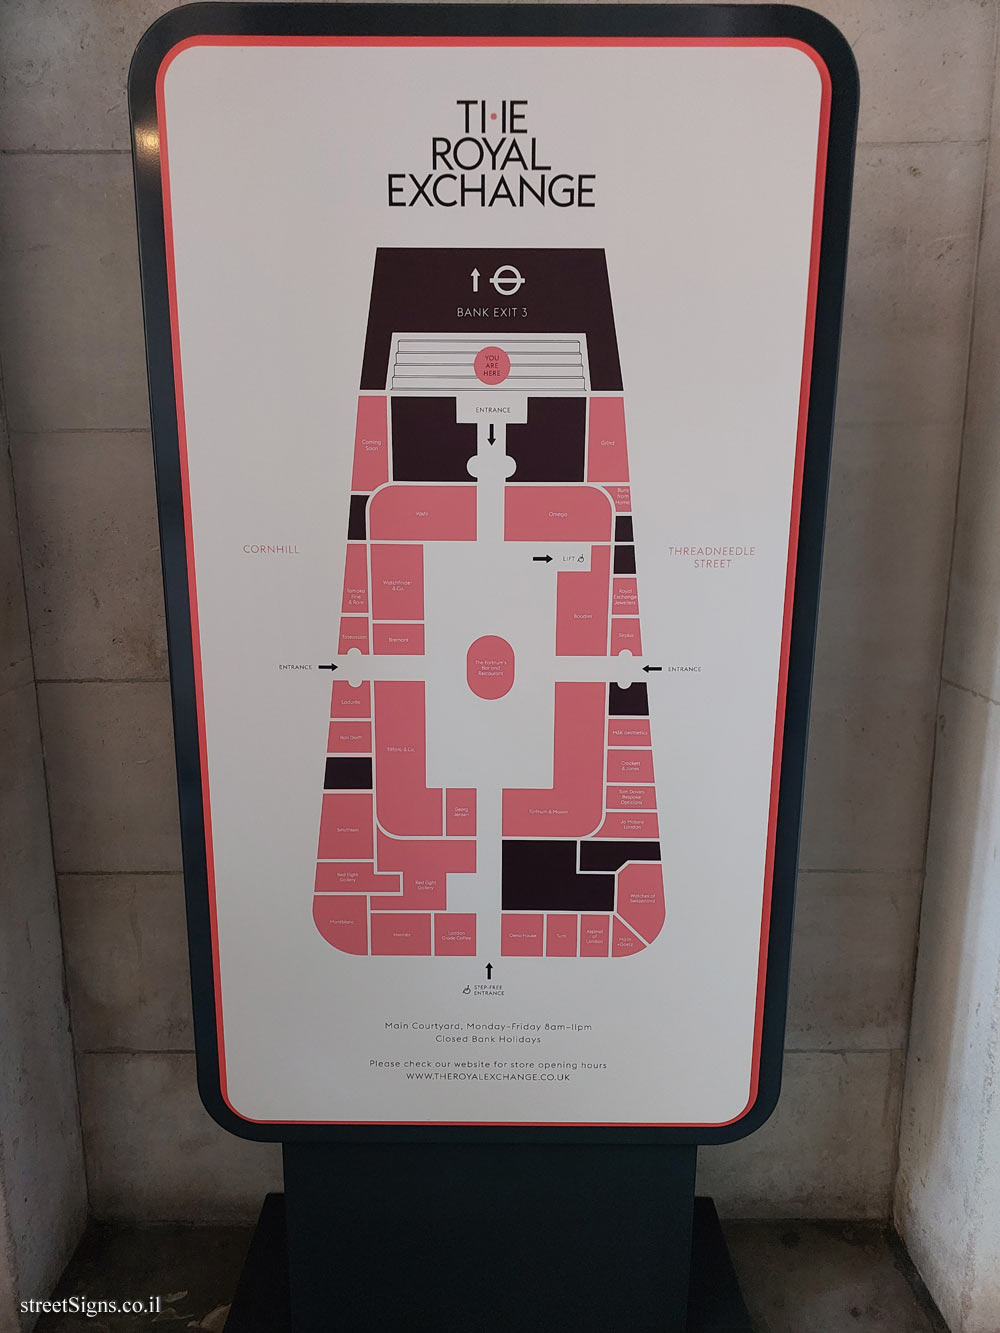 London - The Royal Exchange - 1 Royal Exchange, London EC3V 3DG, UK